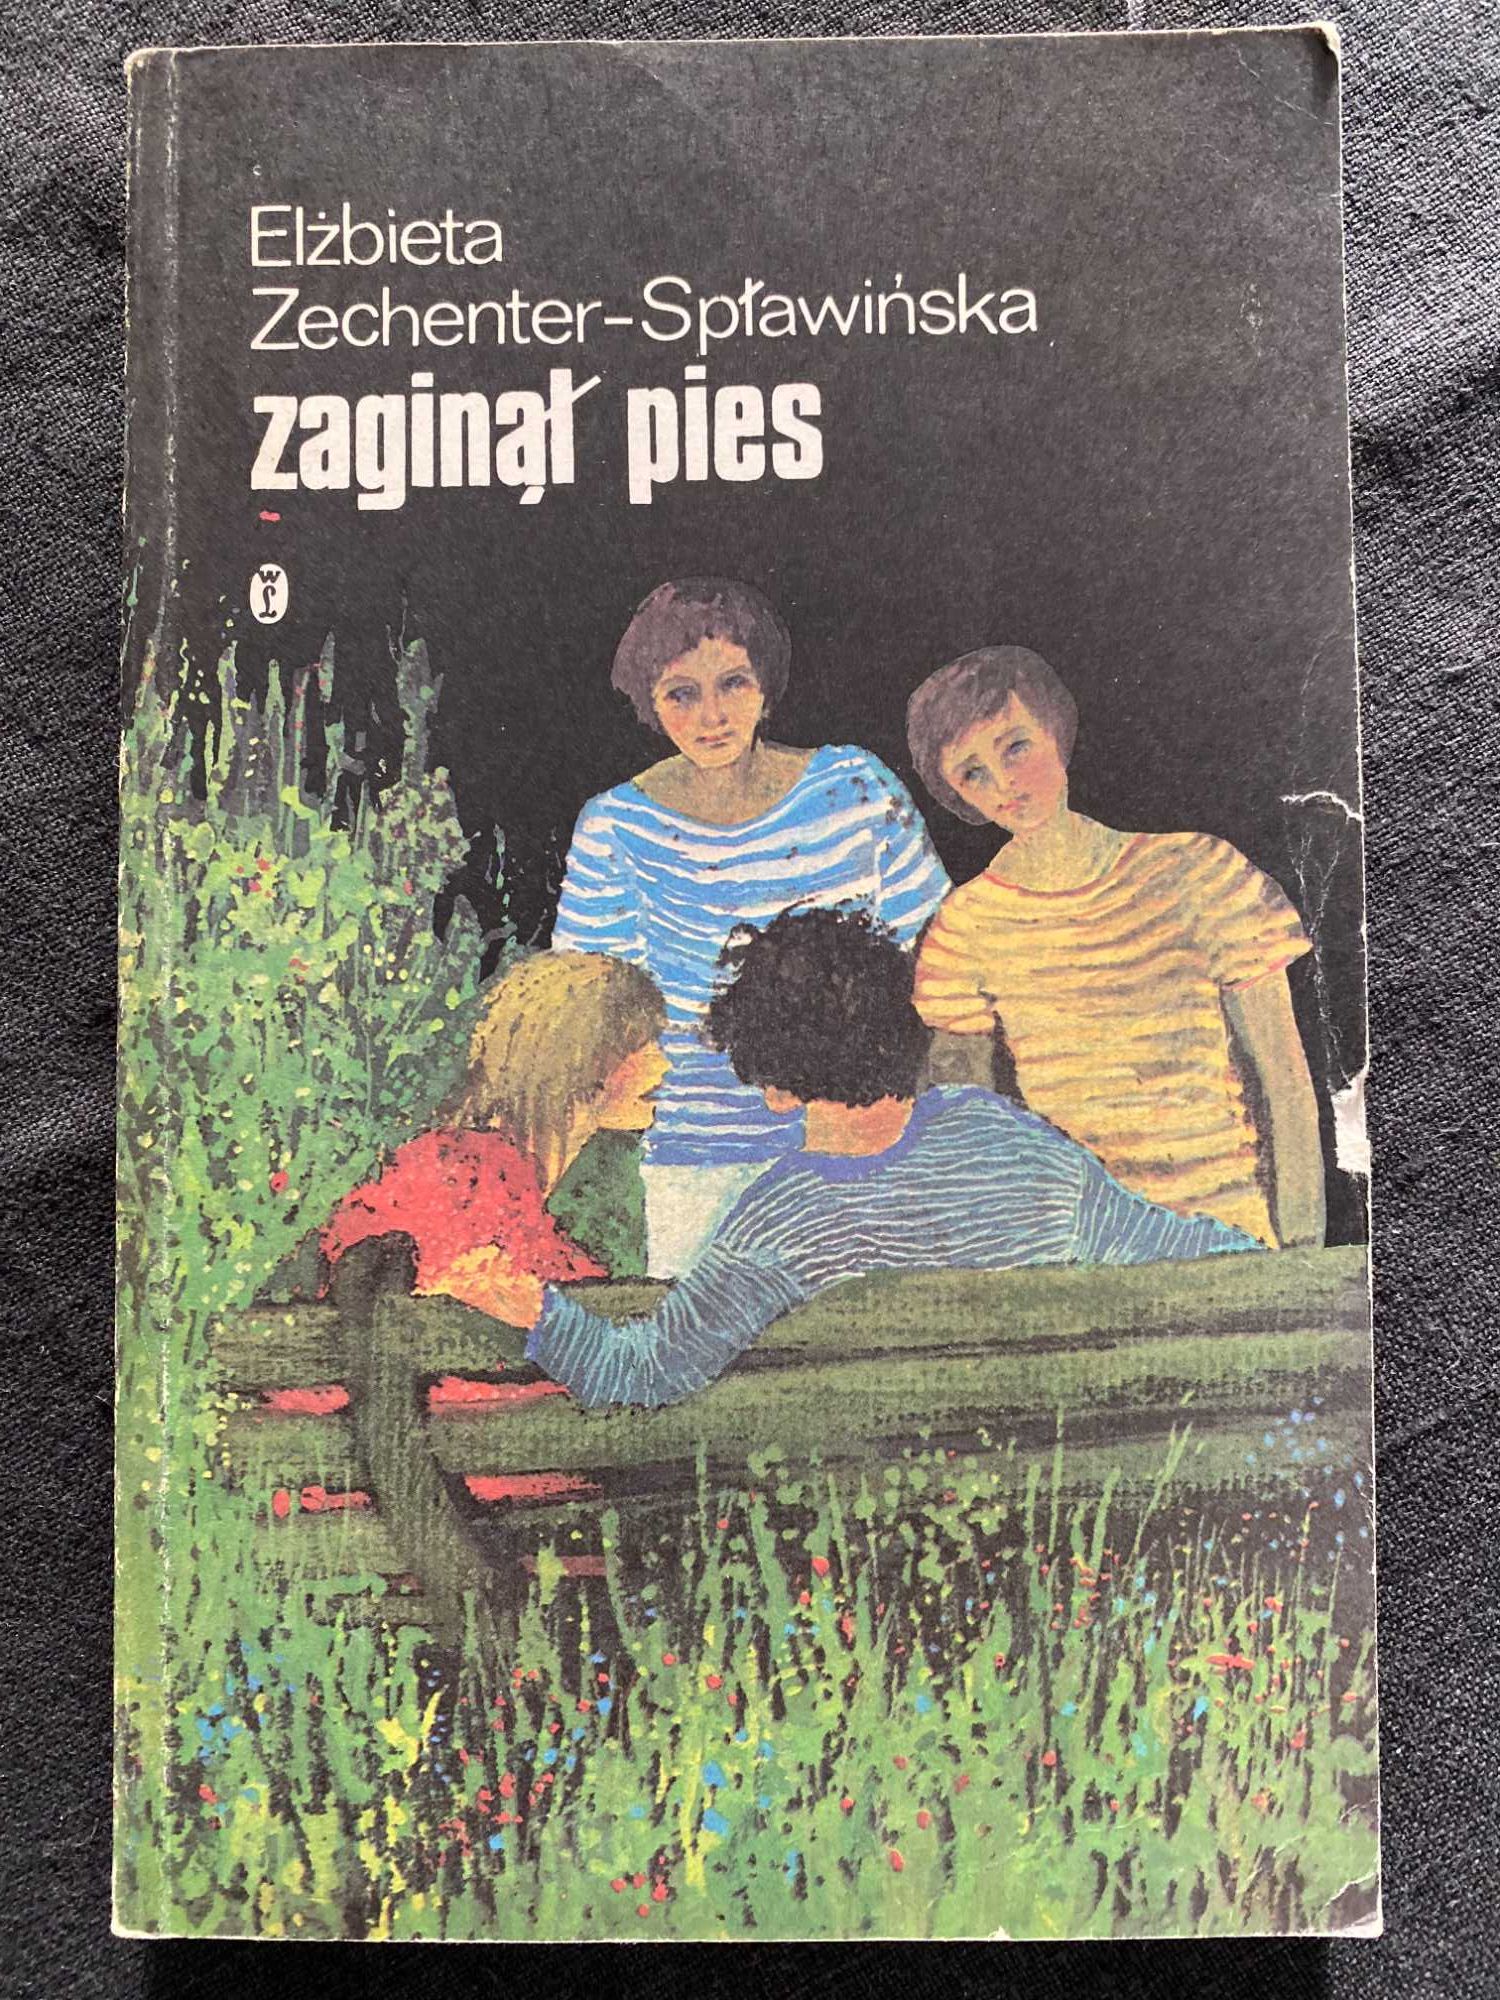 ZAGINAL PIES-Elzbieta Zechenter